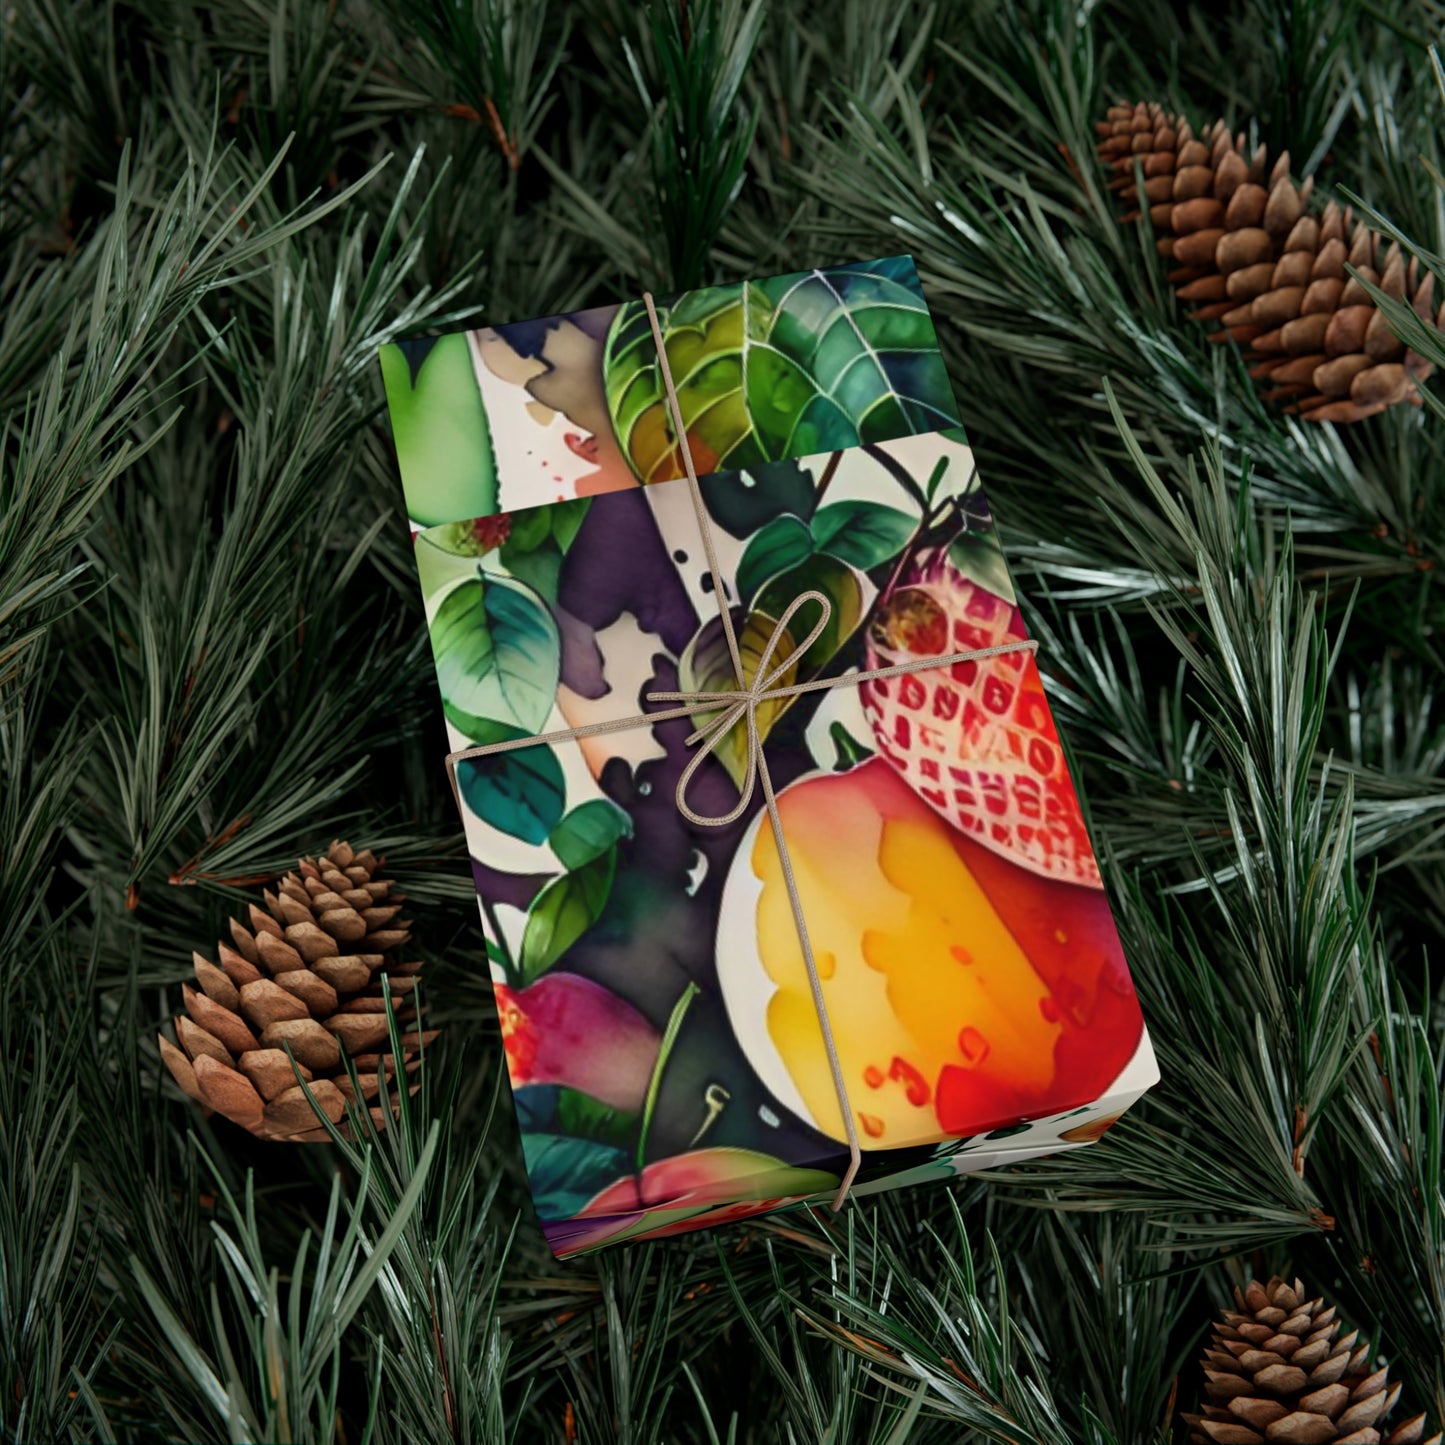 Fruit Watercolor Gift Wrap Paper